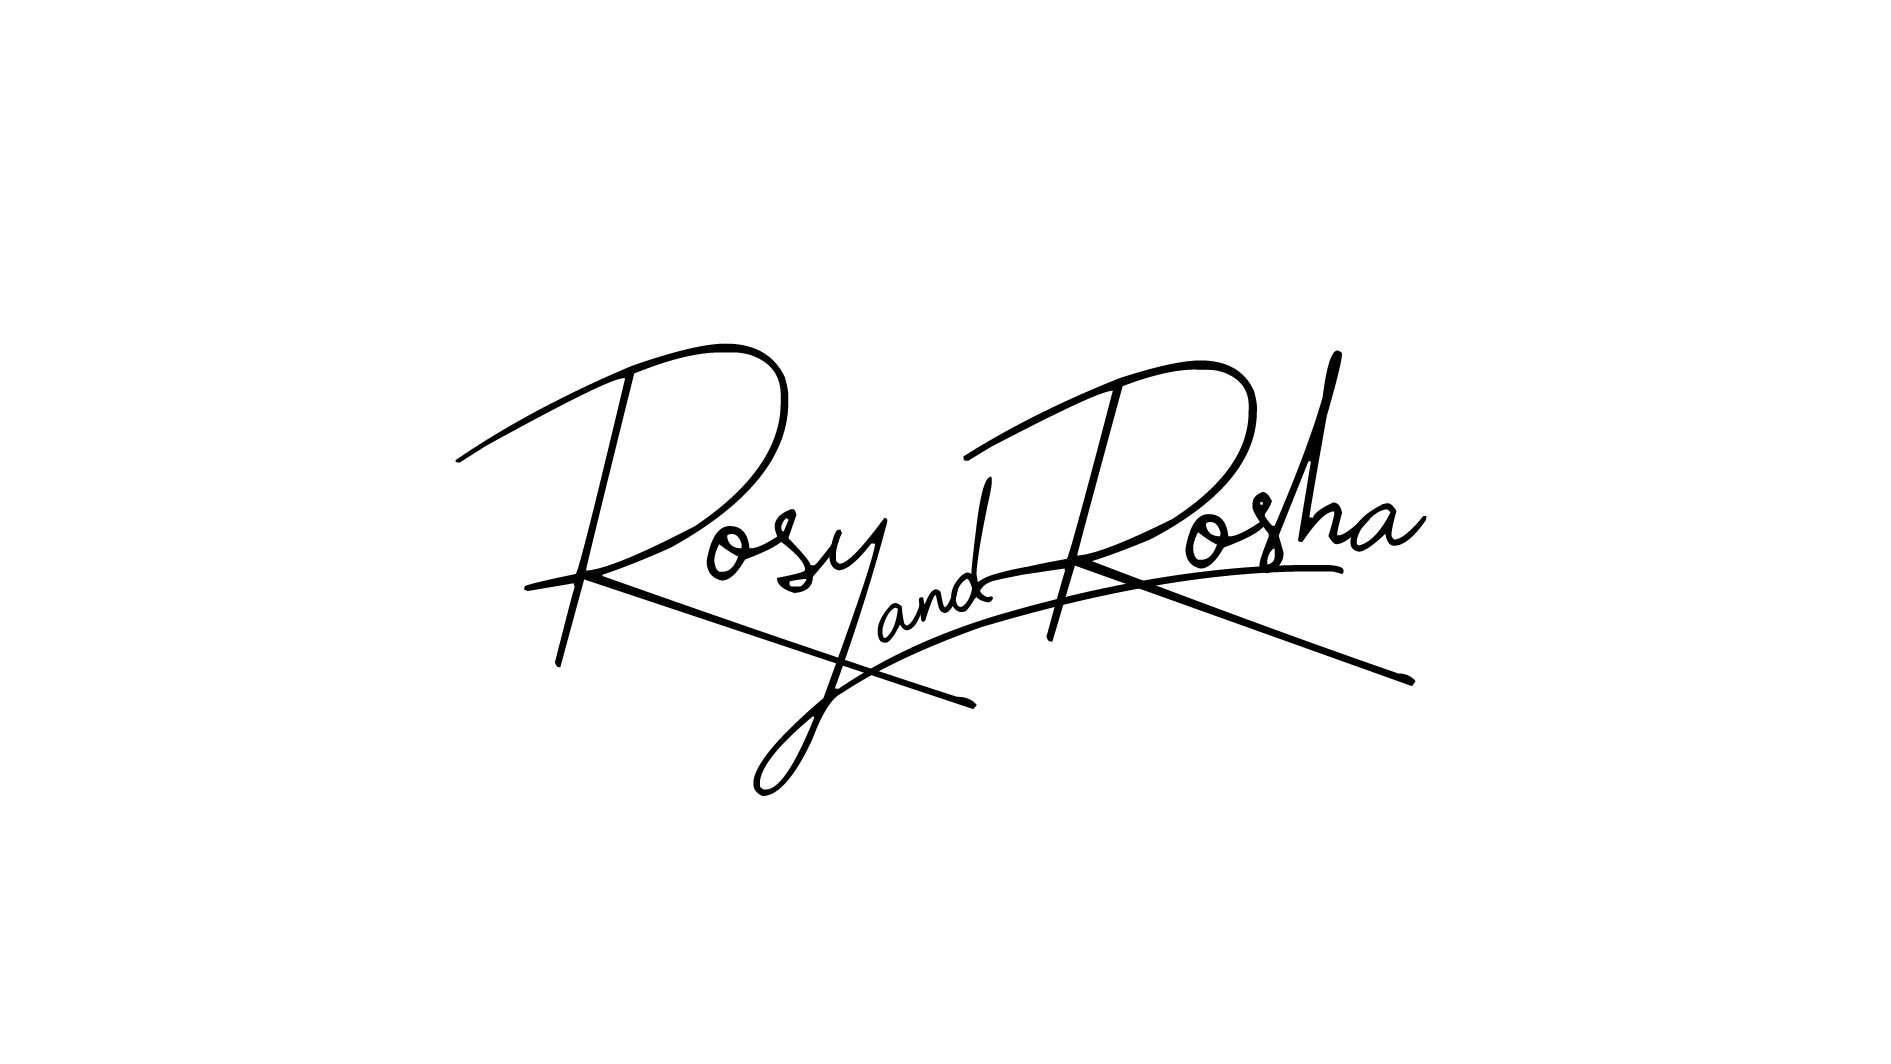 ROSY AND ROSHA - Sd Biotechnologies Co., Ltd. Trademark Registration